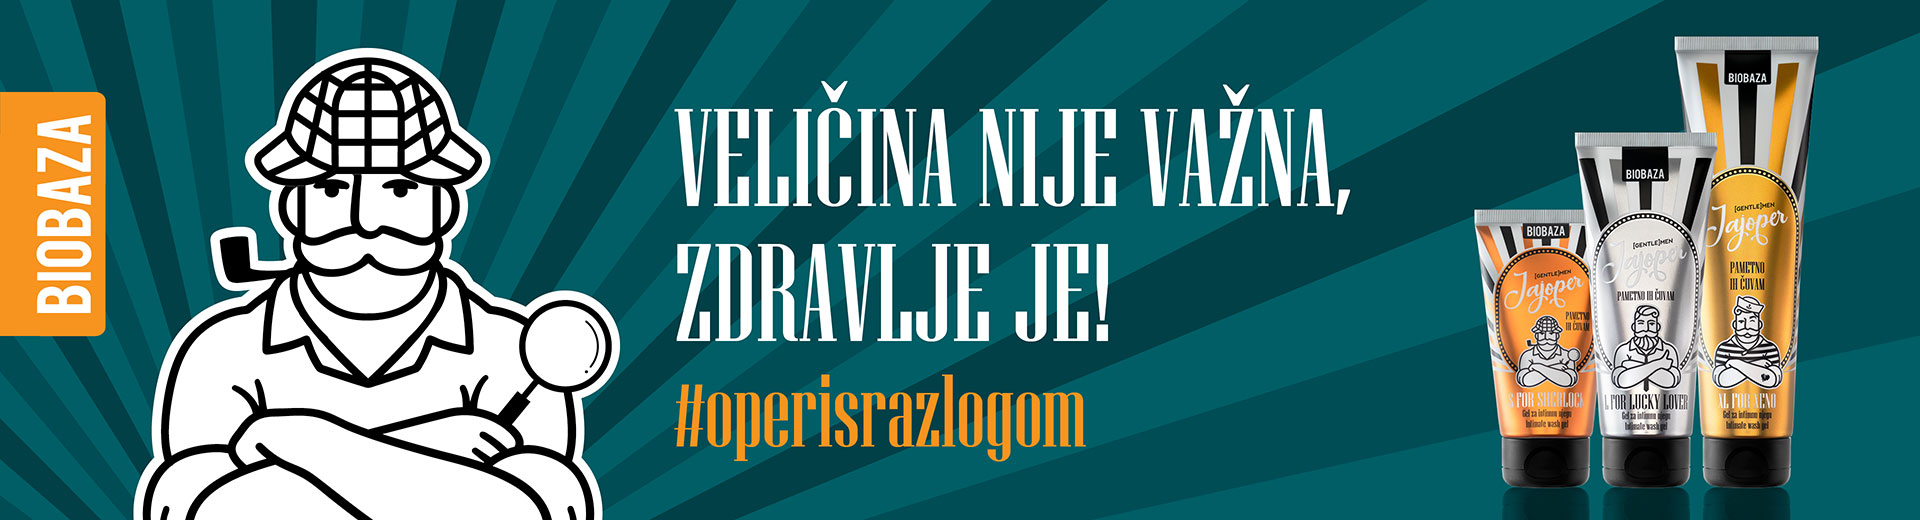 Jajoper web banner 1920x520 w